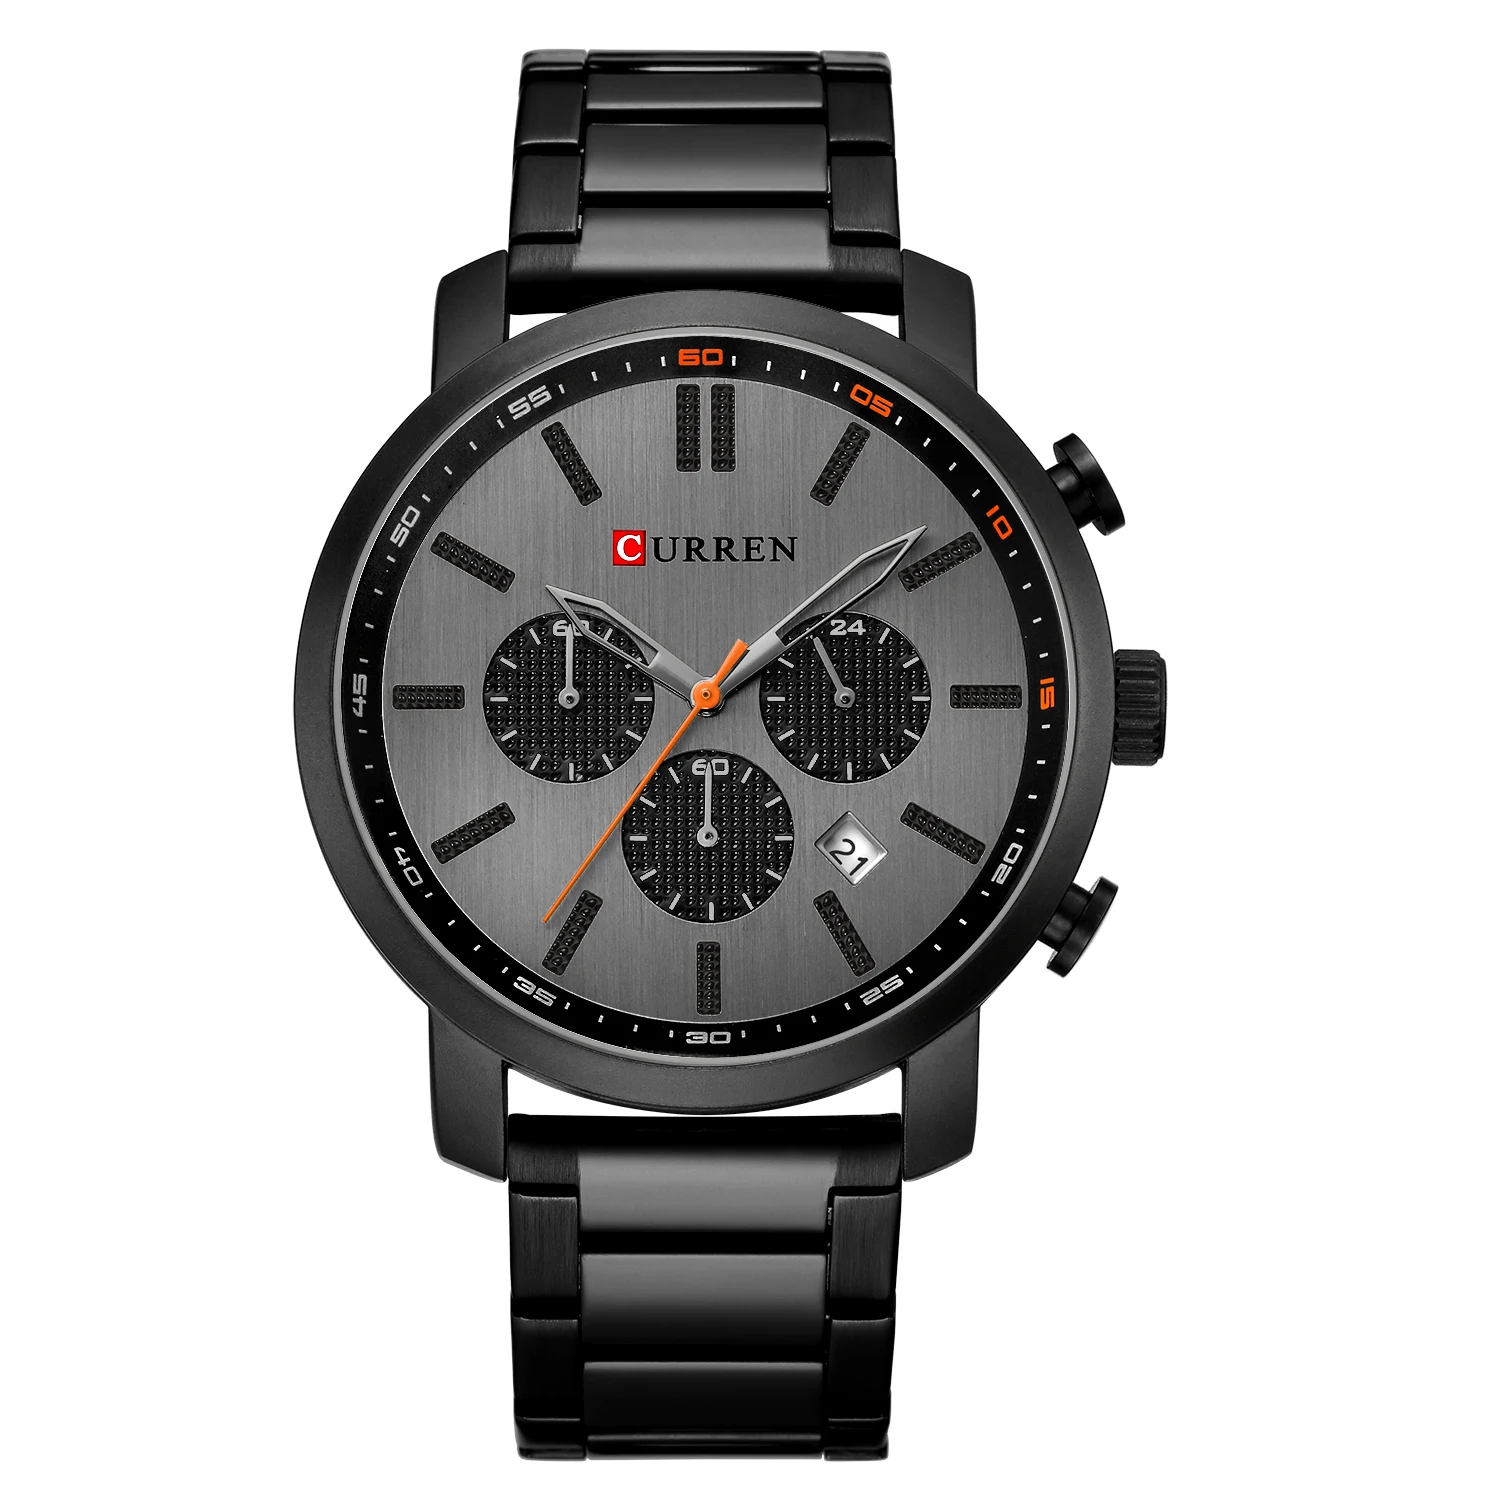 

New CURREN 8315 Luxury Brand Watches Men's Quartz Clock Leather Strap Waterproof Date Wristwatch Reloj, As picture